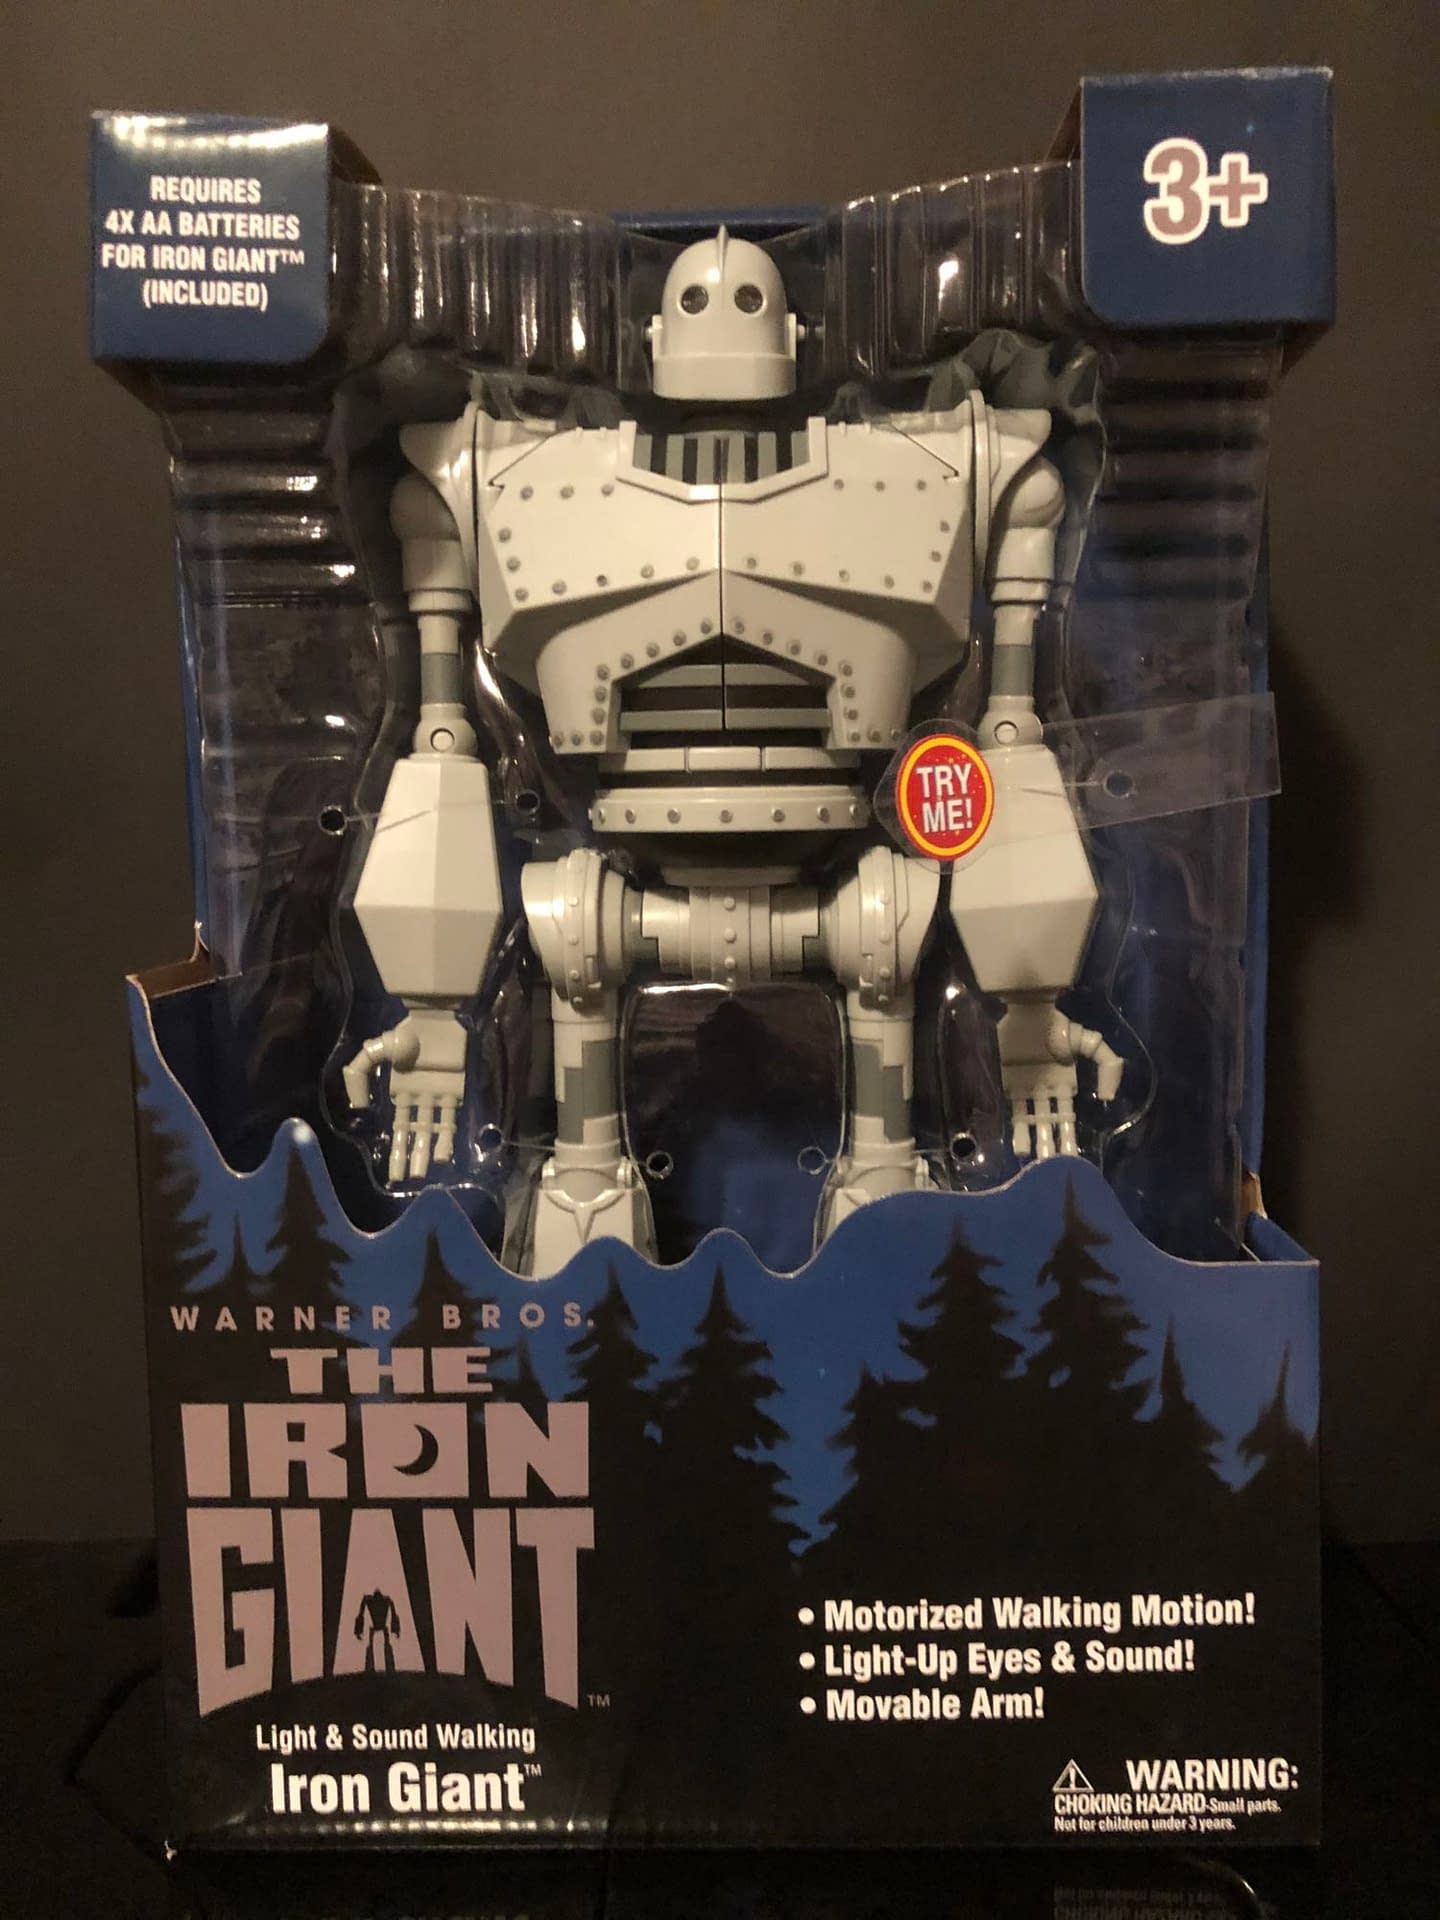 WB THE IRON GIANT ROBOT Light & Sound Walking Walmart Exclusive Warner Bros 2020